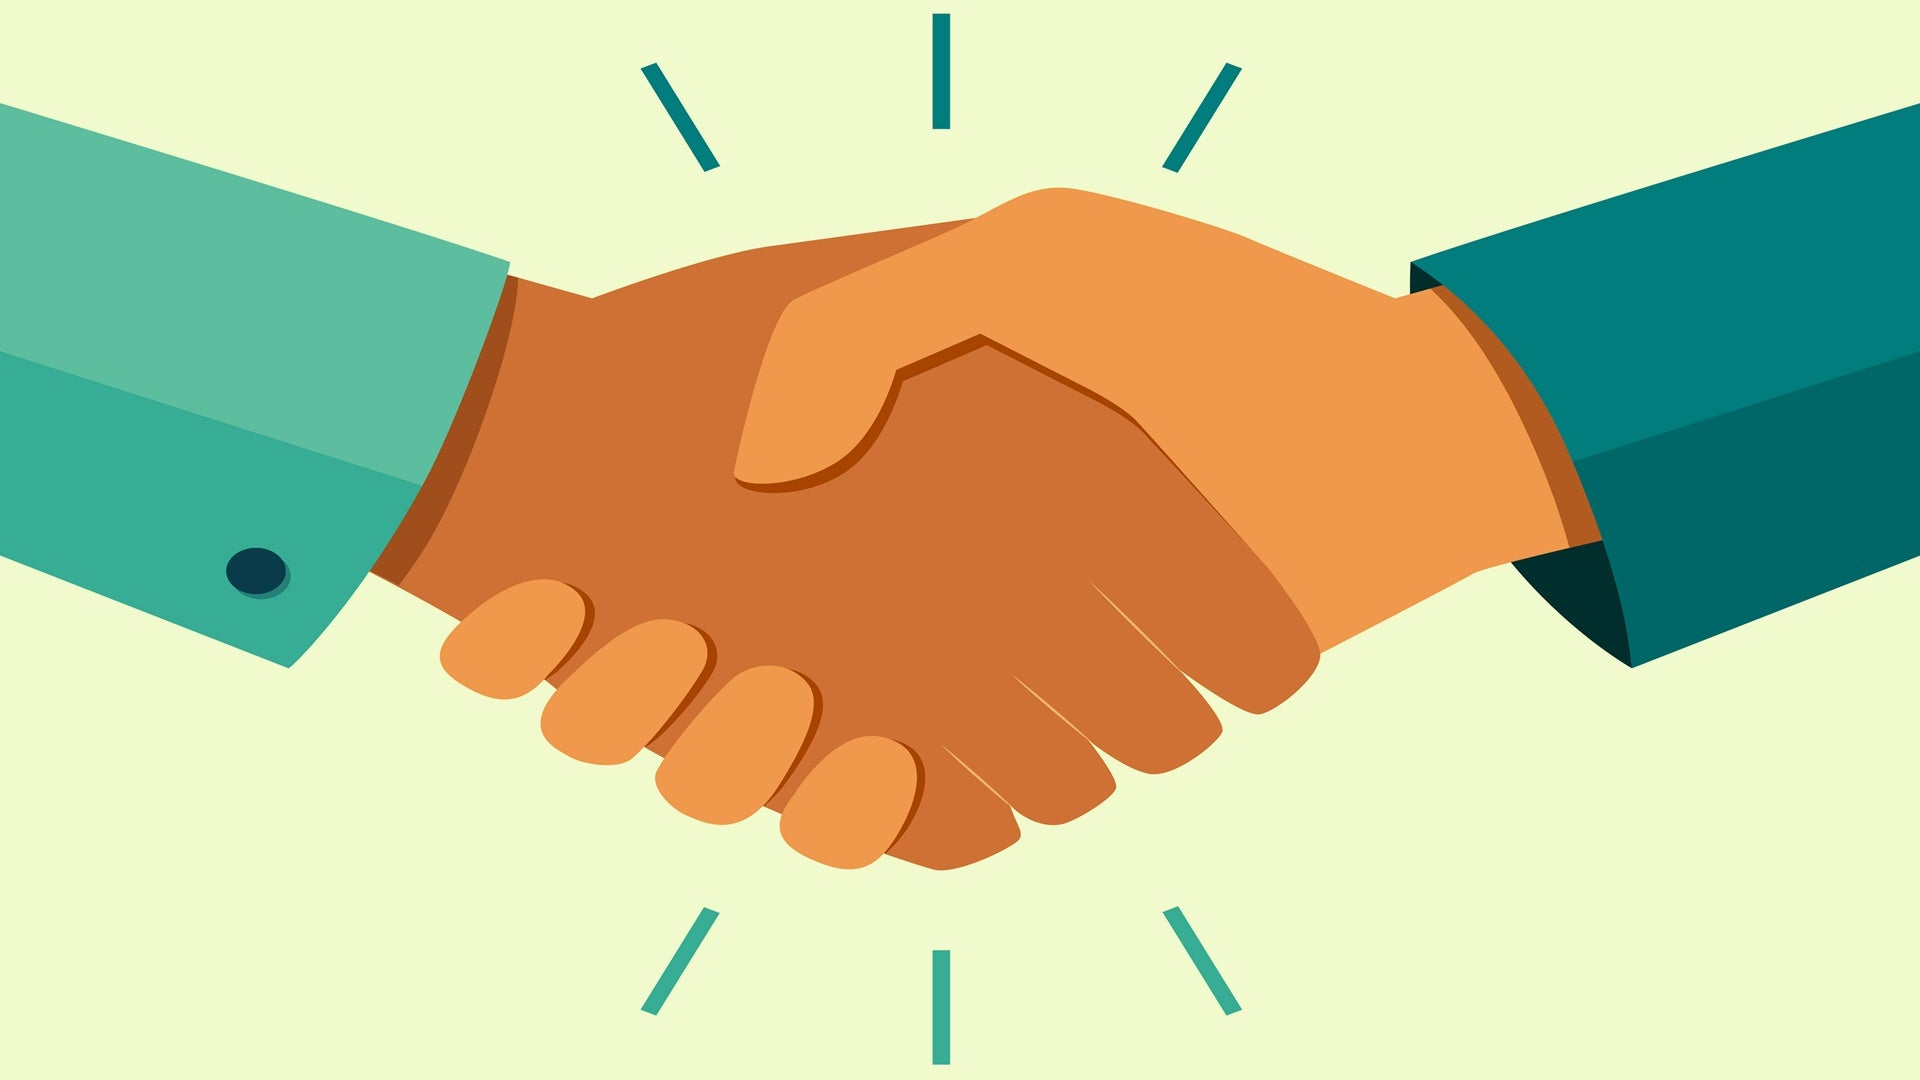 Handshake of business partners. Business handshake. Successful deal. Vector flat style illustration